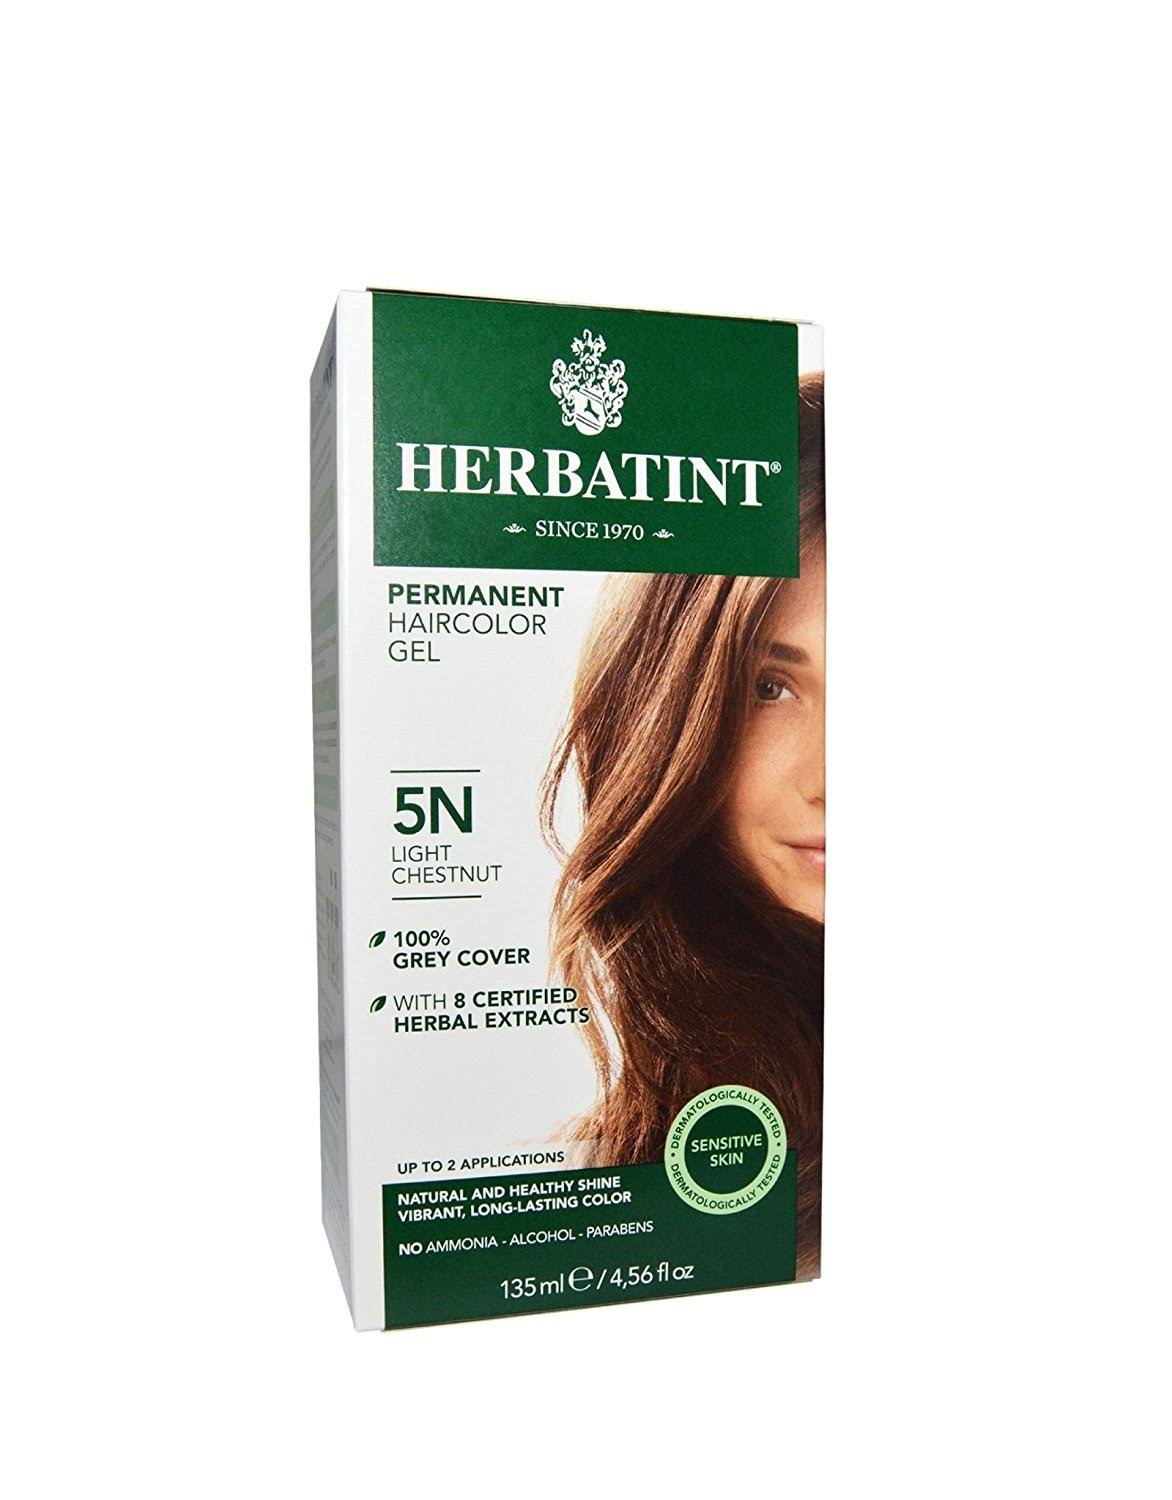 Herbatint Permanent Haircolour Gel - Aloe Vera, 135ml